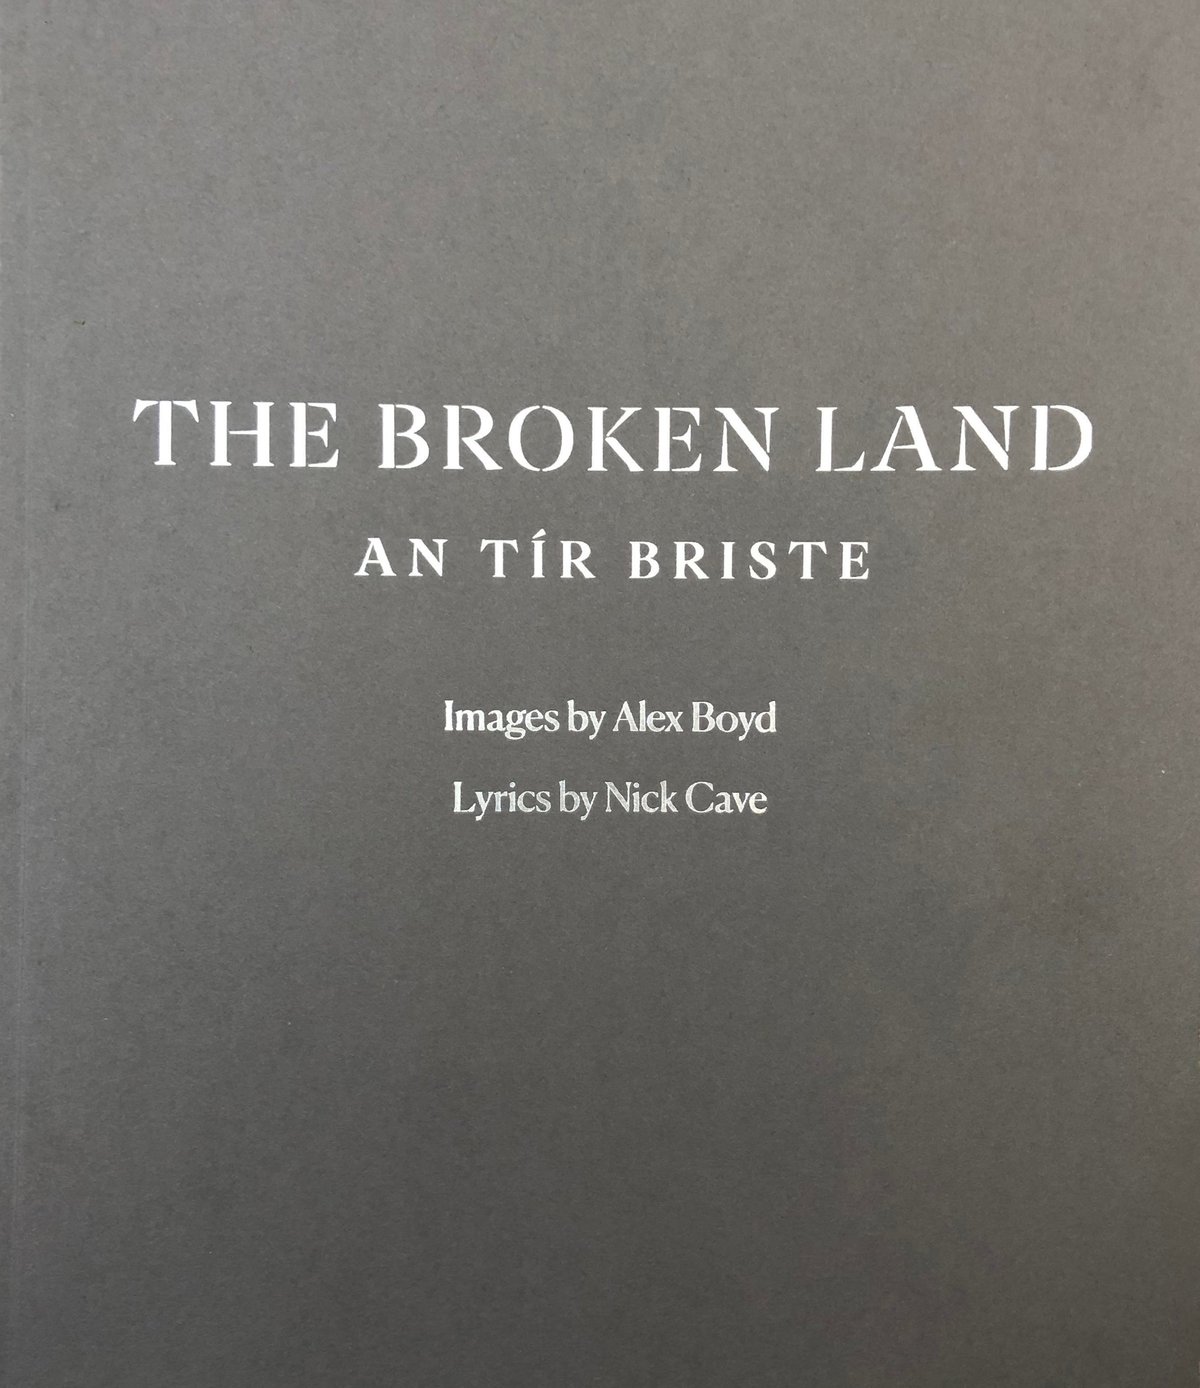 Image of The Broken Land - Alex Boyd / Nick Cave